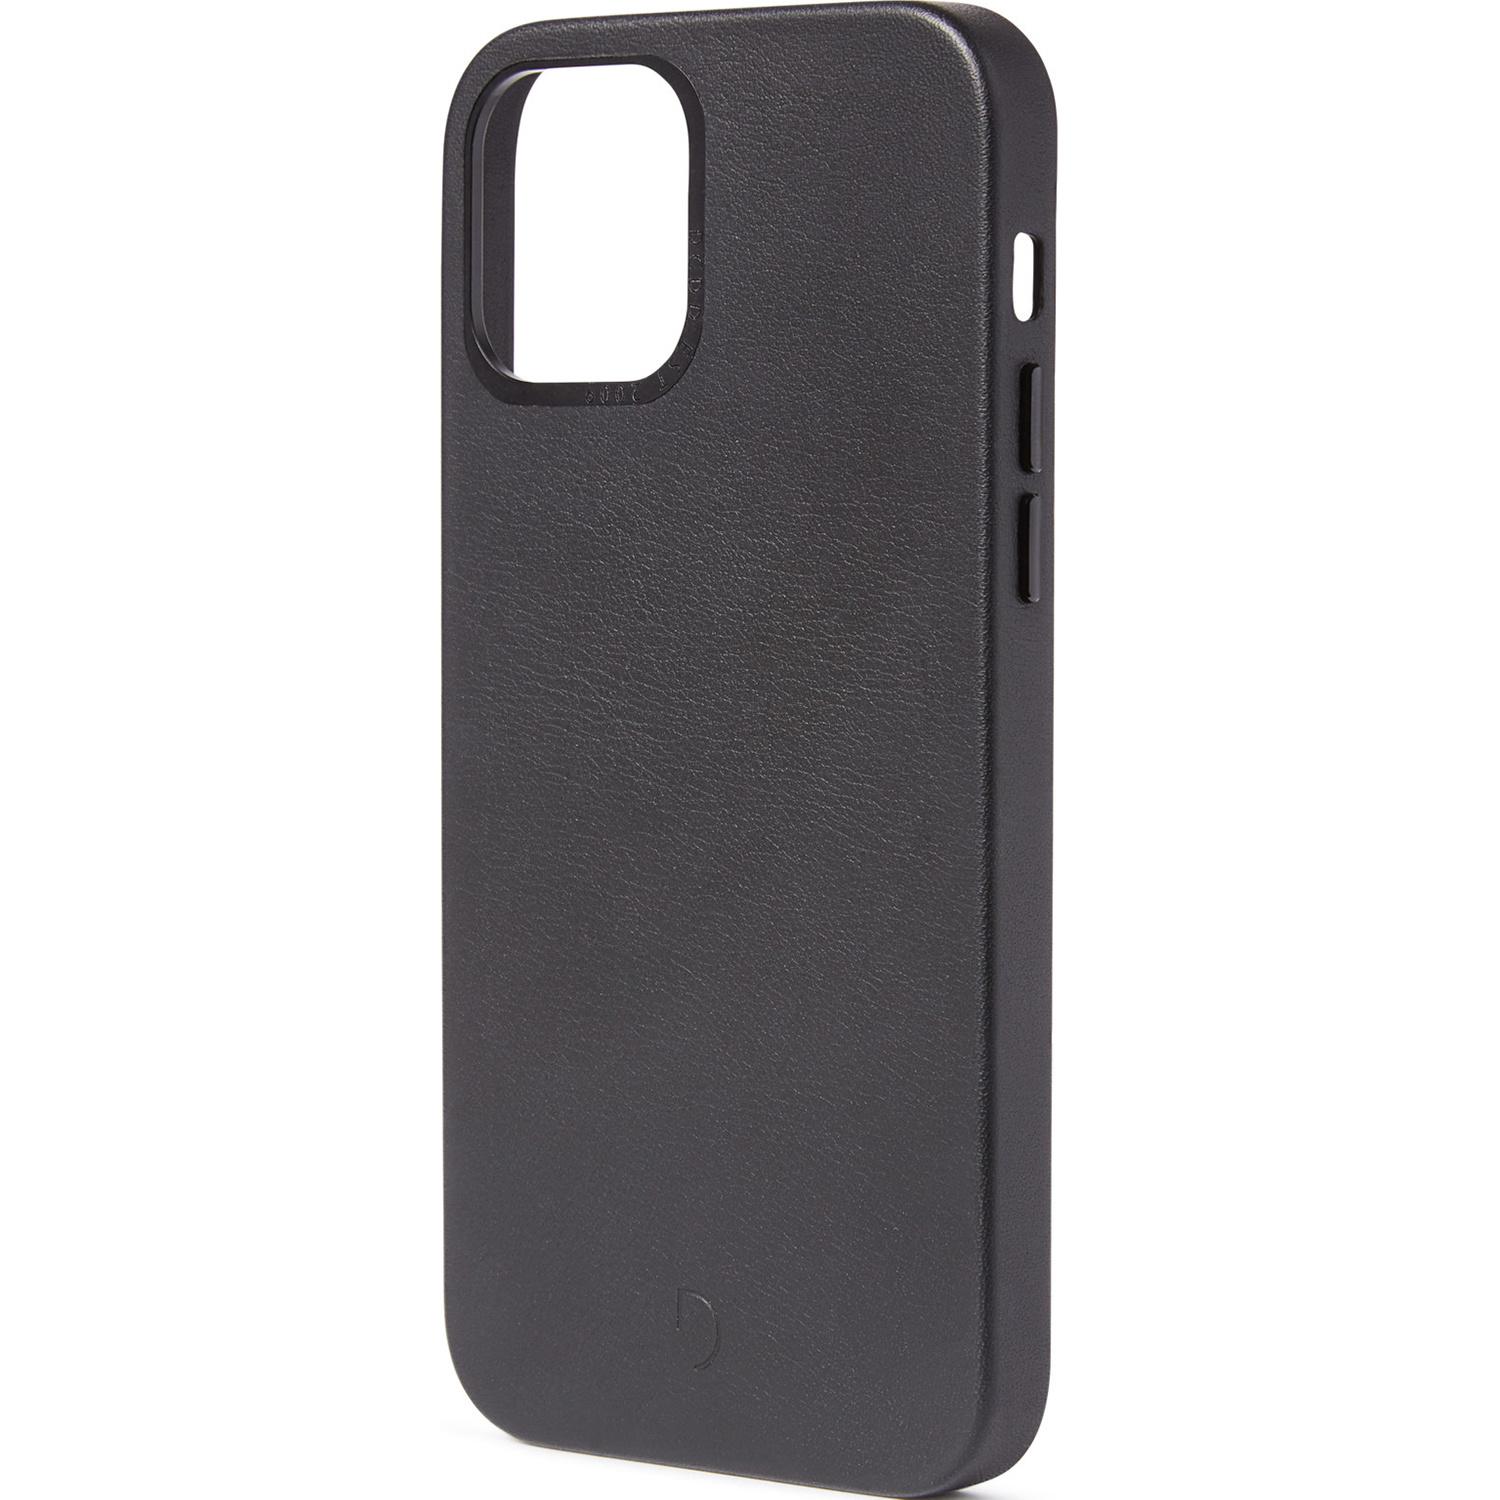 Leather Backcover MagSafe iPhone 12 Pro Max - Zwart - Zwart / Black - Decoded